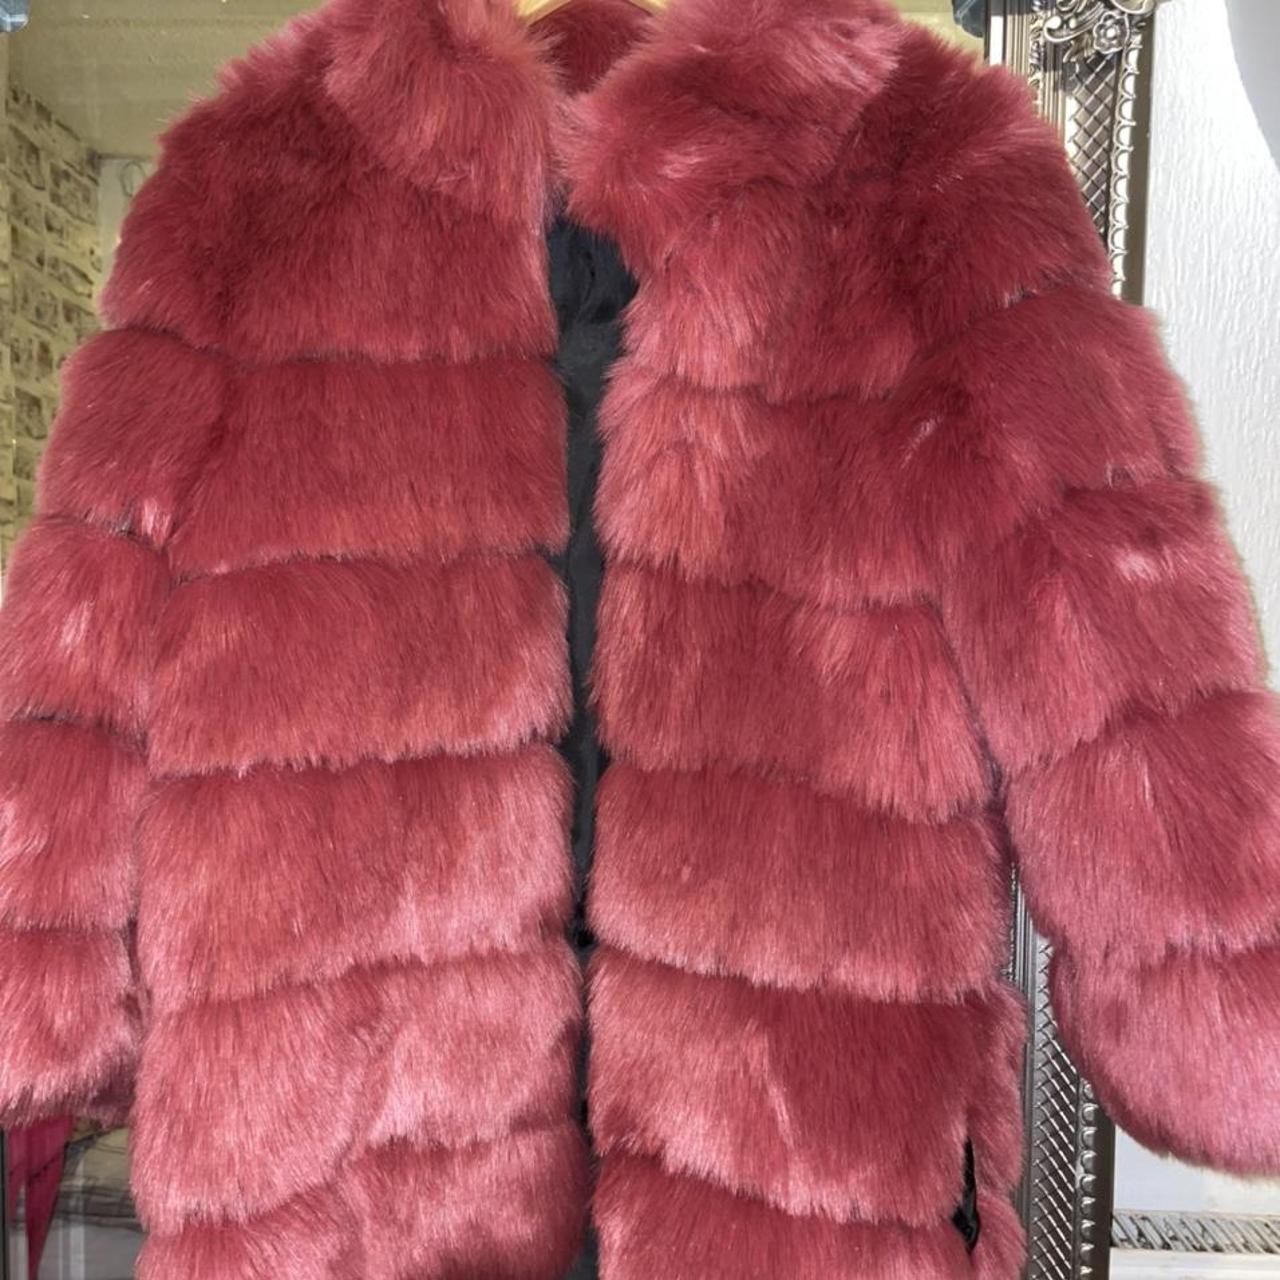 Beautiful pink faux fur coat - hardly worn. Selling... - Depop